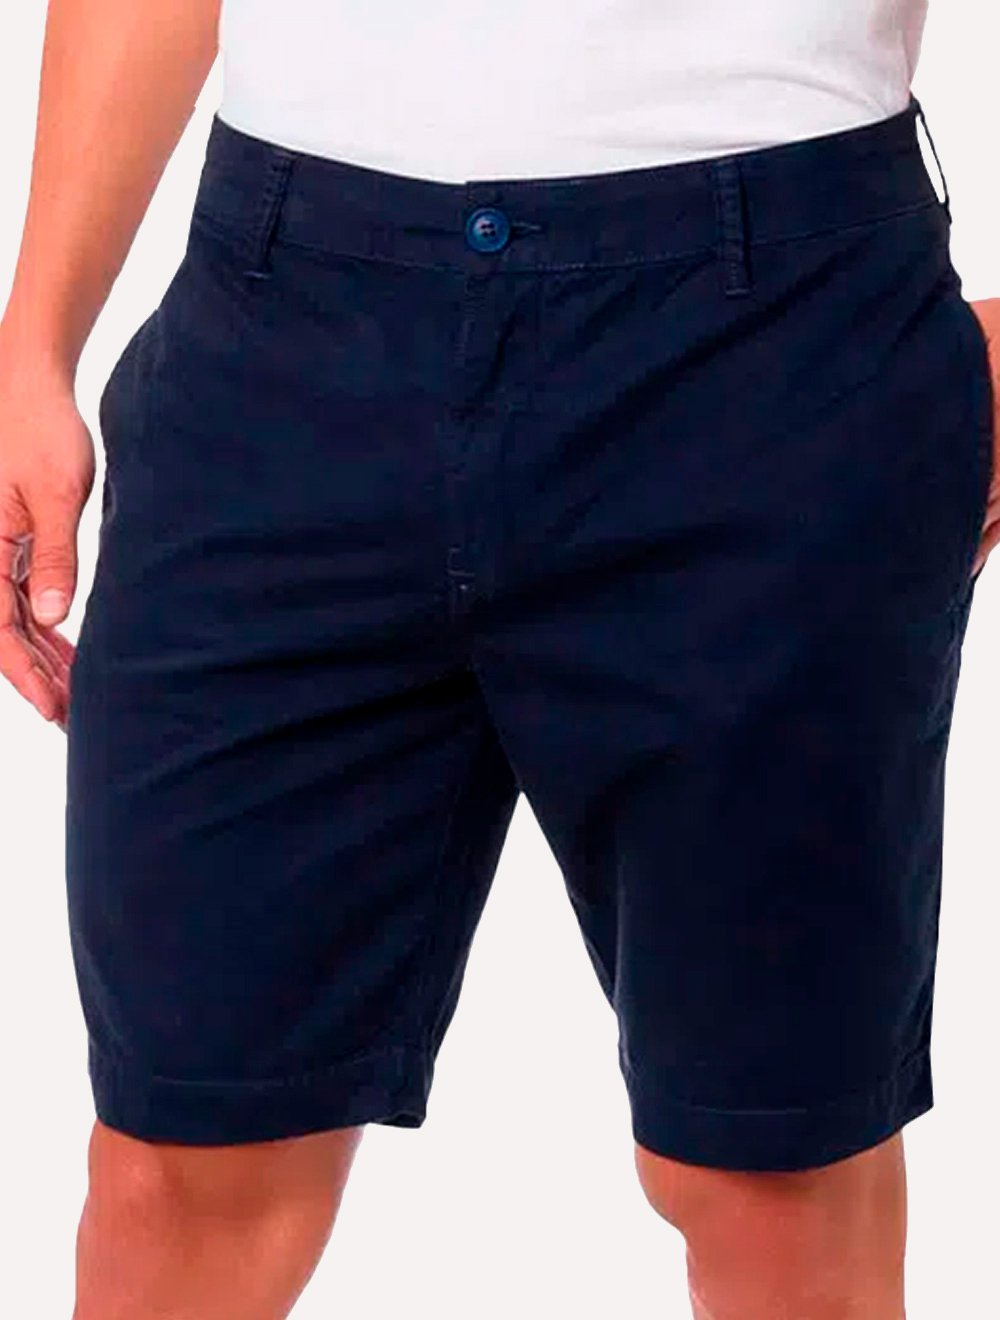 Bermuda Calvin Klein Jeans Masculina Sarja Chino Pockets Label Azul Marinho